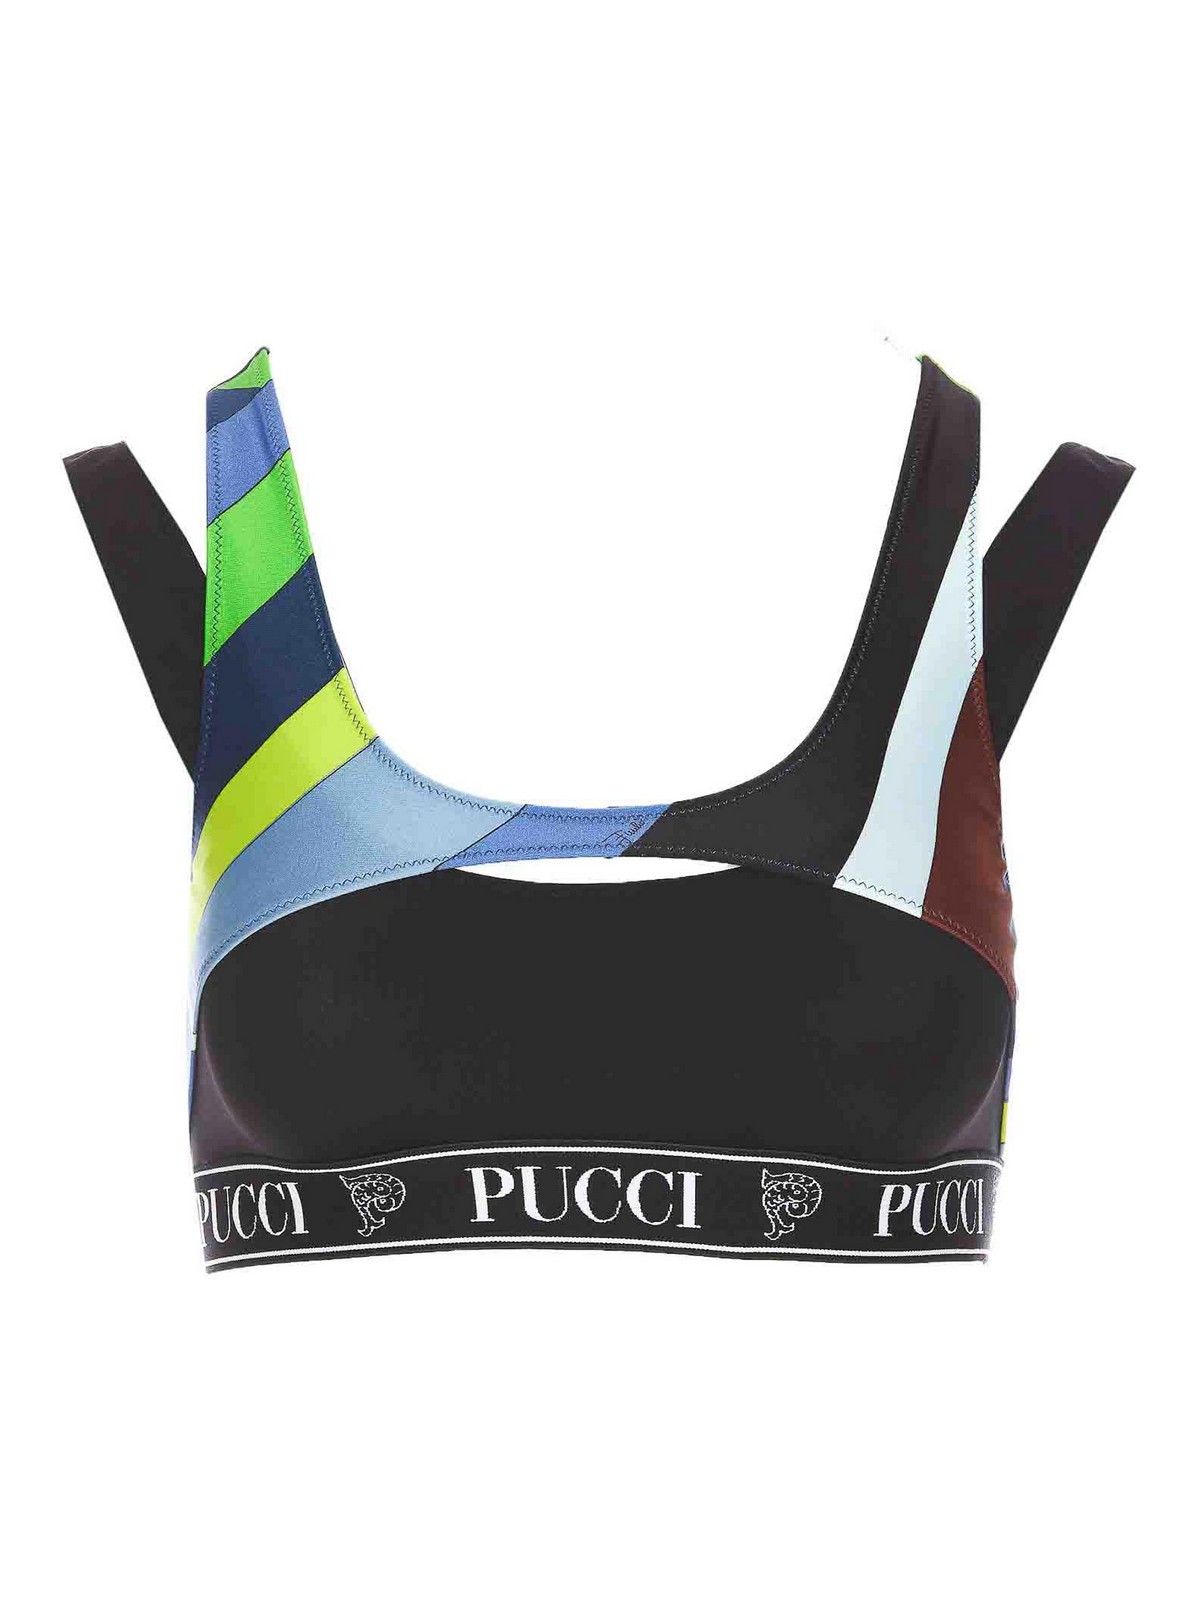 Emilio Pucci Iride Print Top In Multicolour